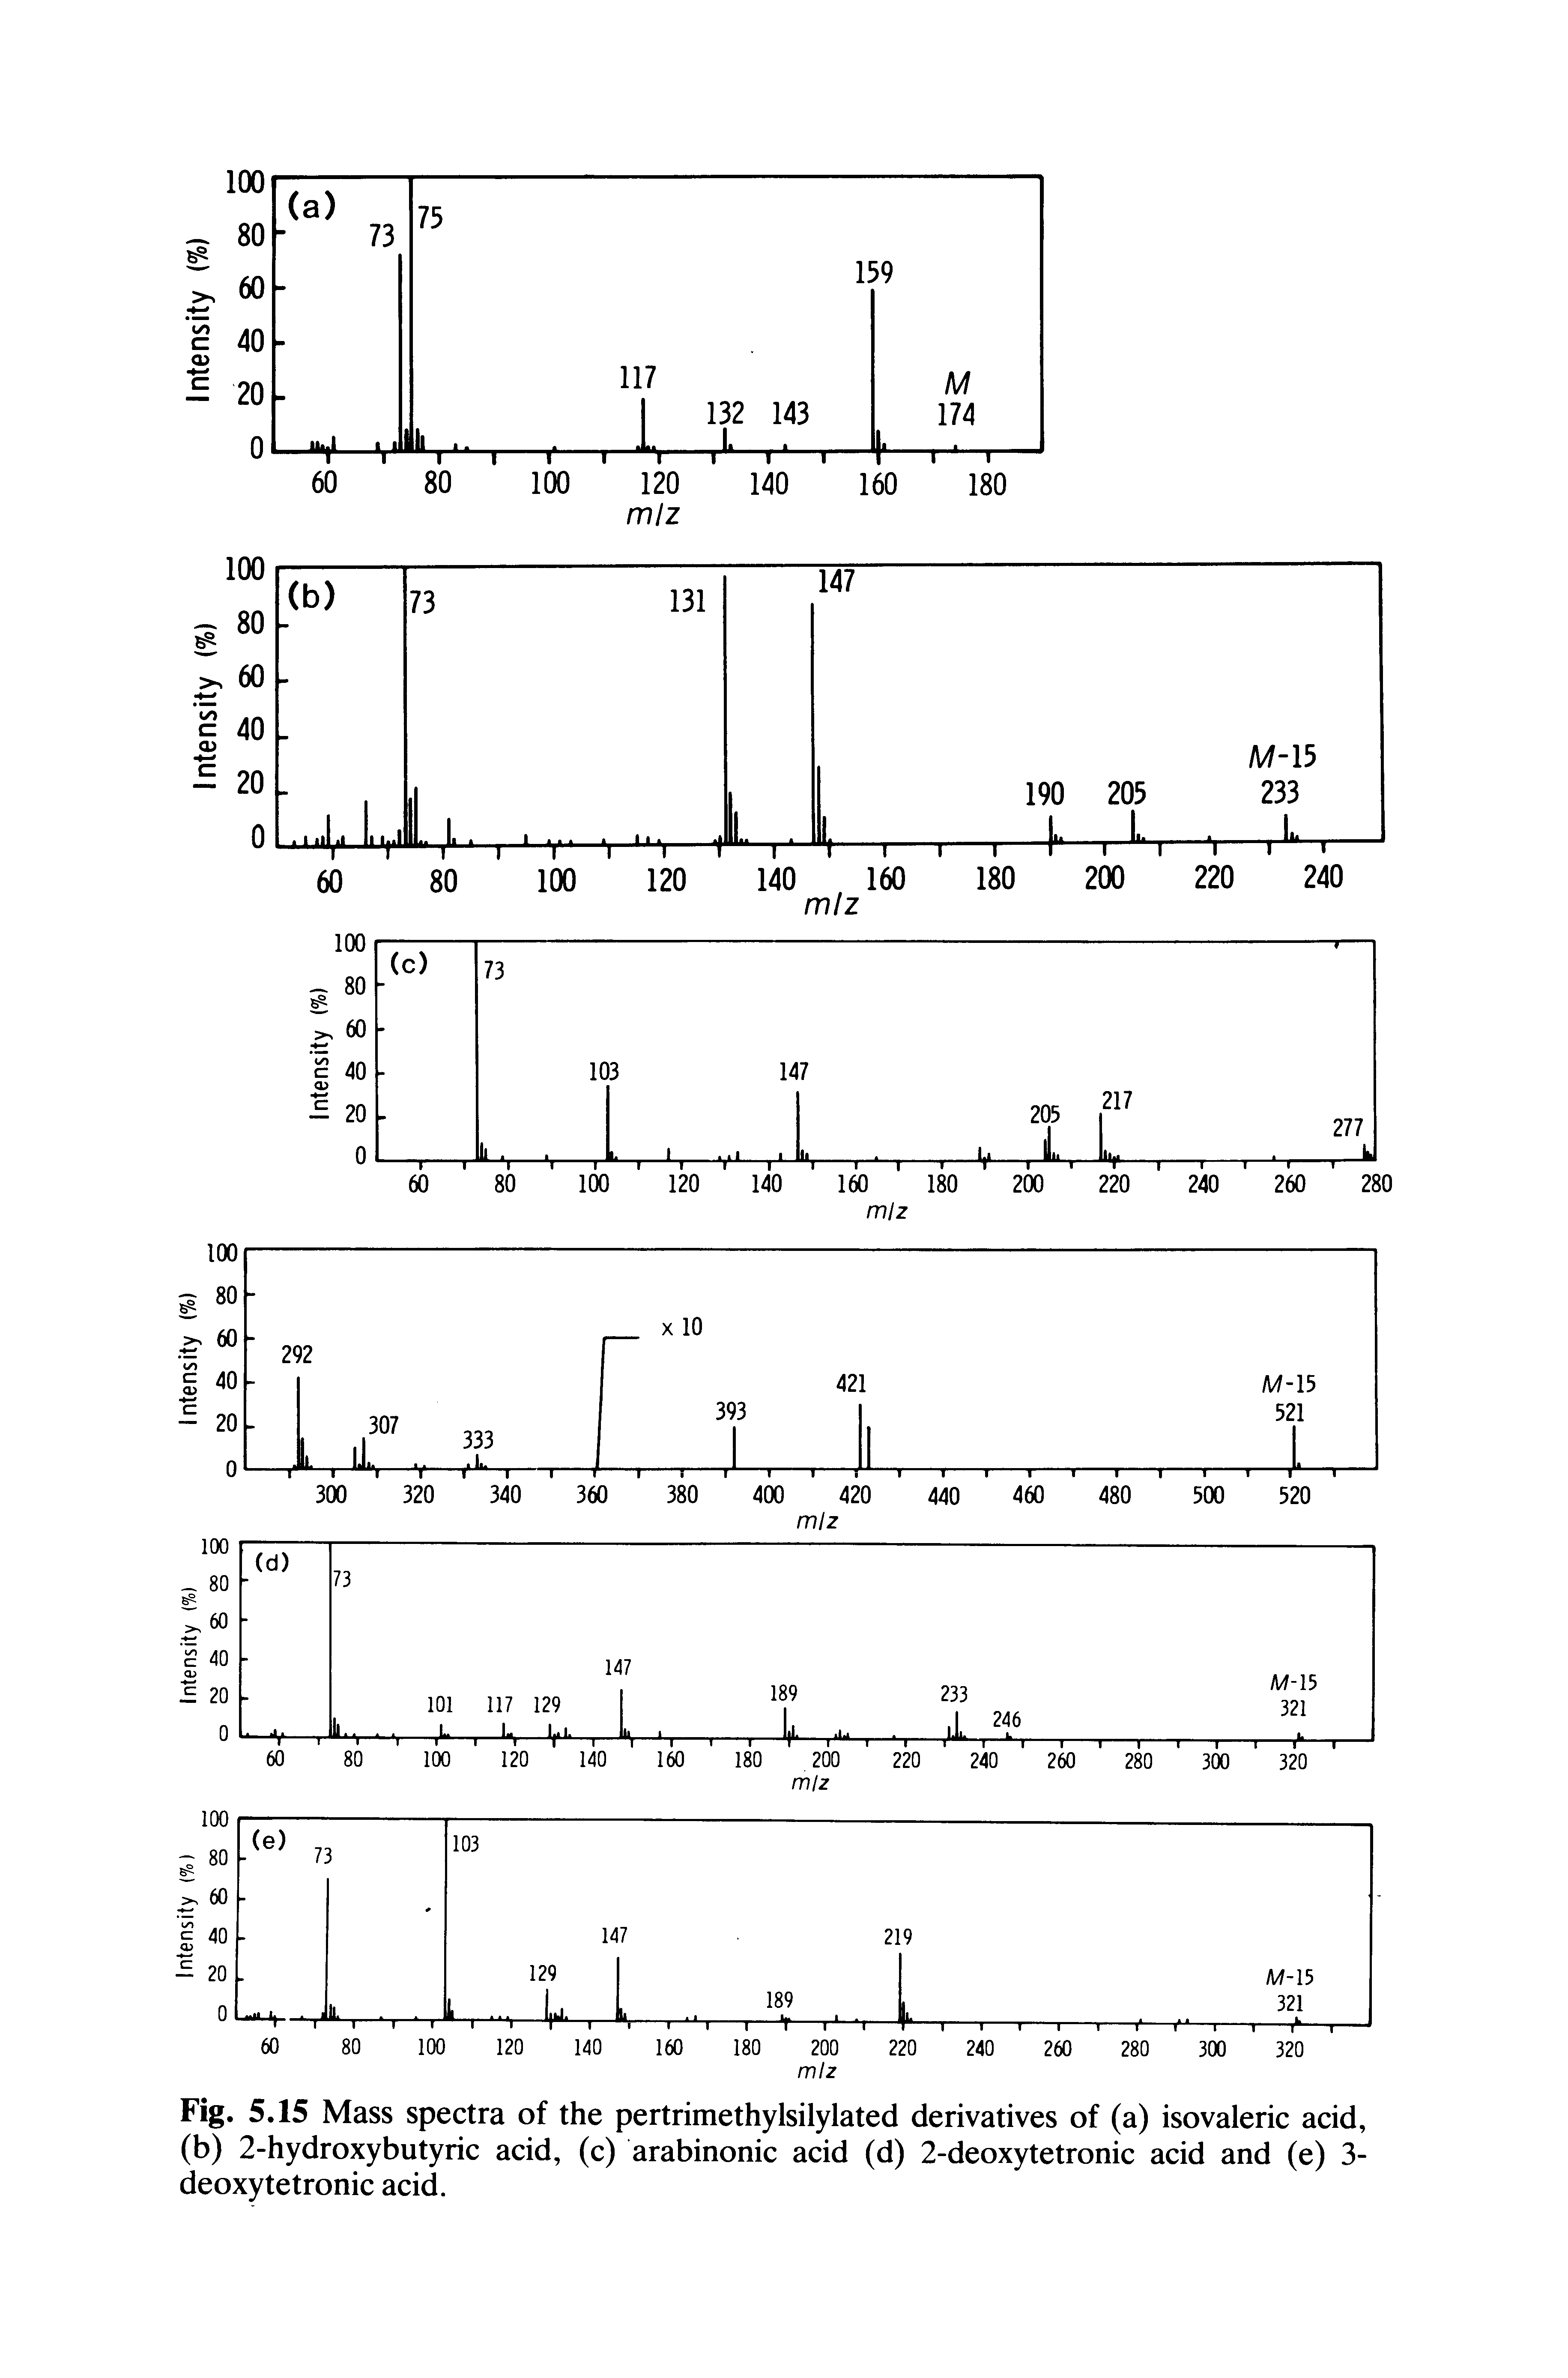 Fig. 5.15 Mass spectra of the pertrimethylsilylated derivatives of (a) isovaleric acid, (b) 2-hydroxybutyric acid, (c) arabinonic acid (d) 2-deoxytetronic acid and (e) 3-deoxytetronic acid.